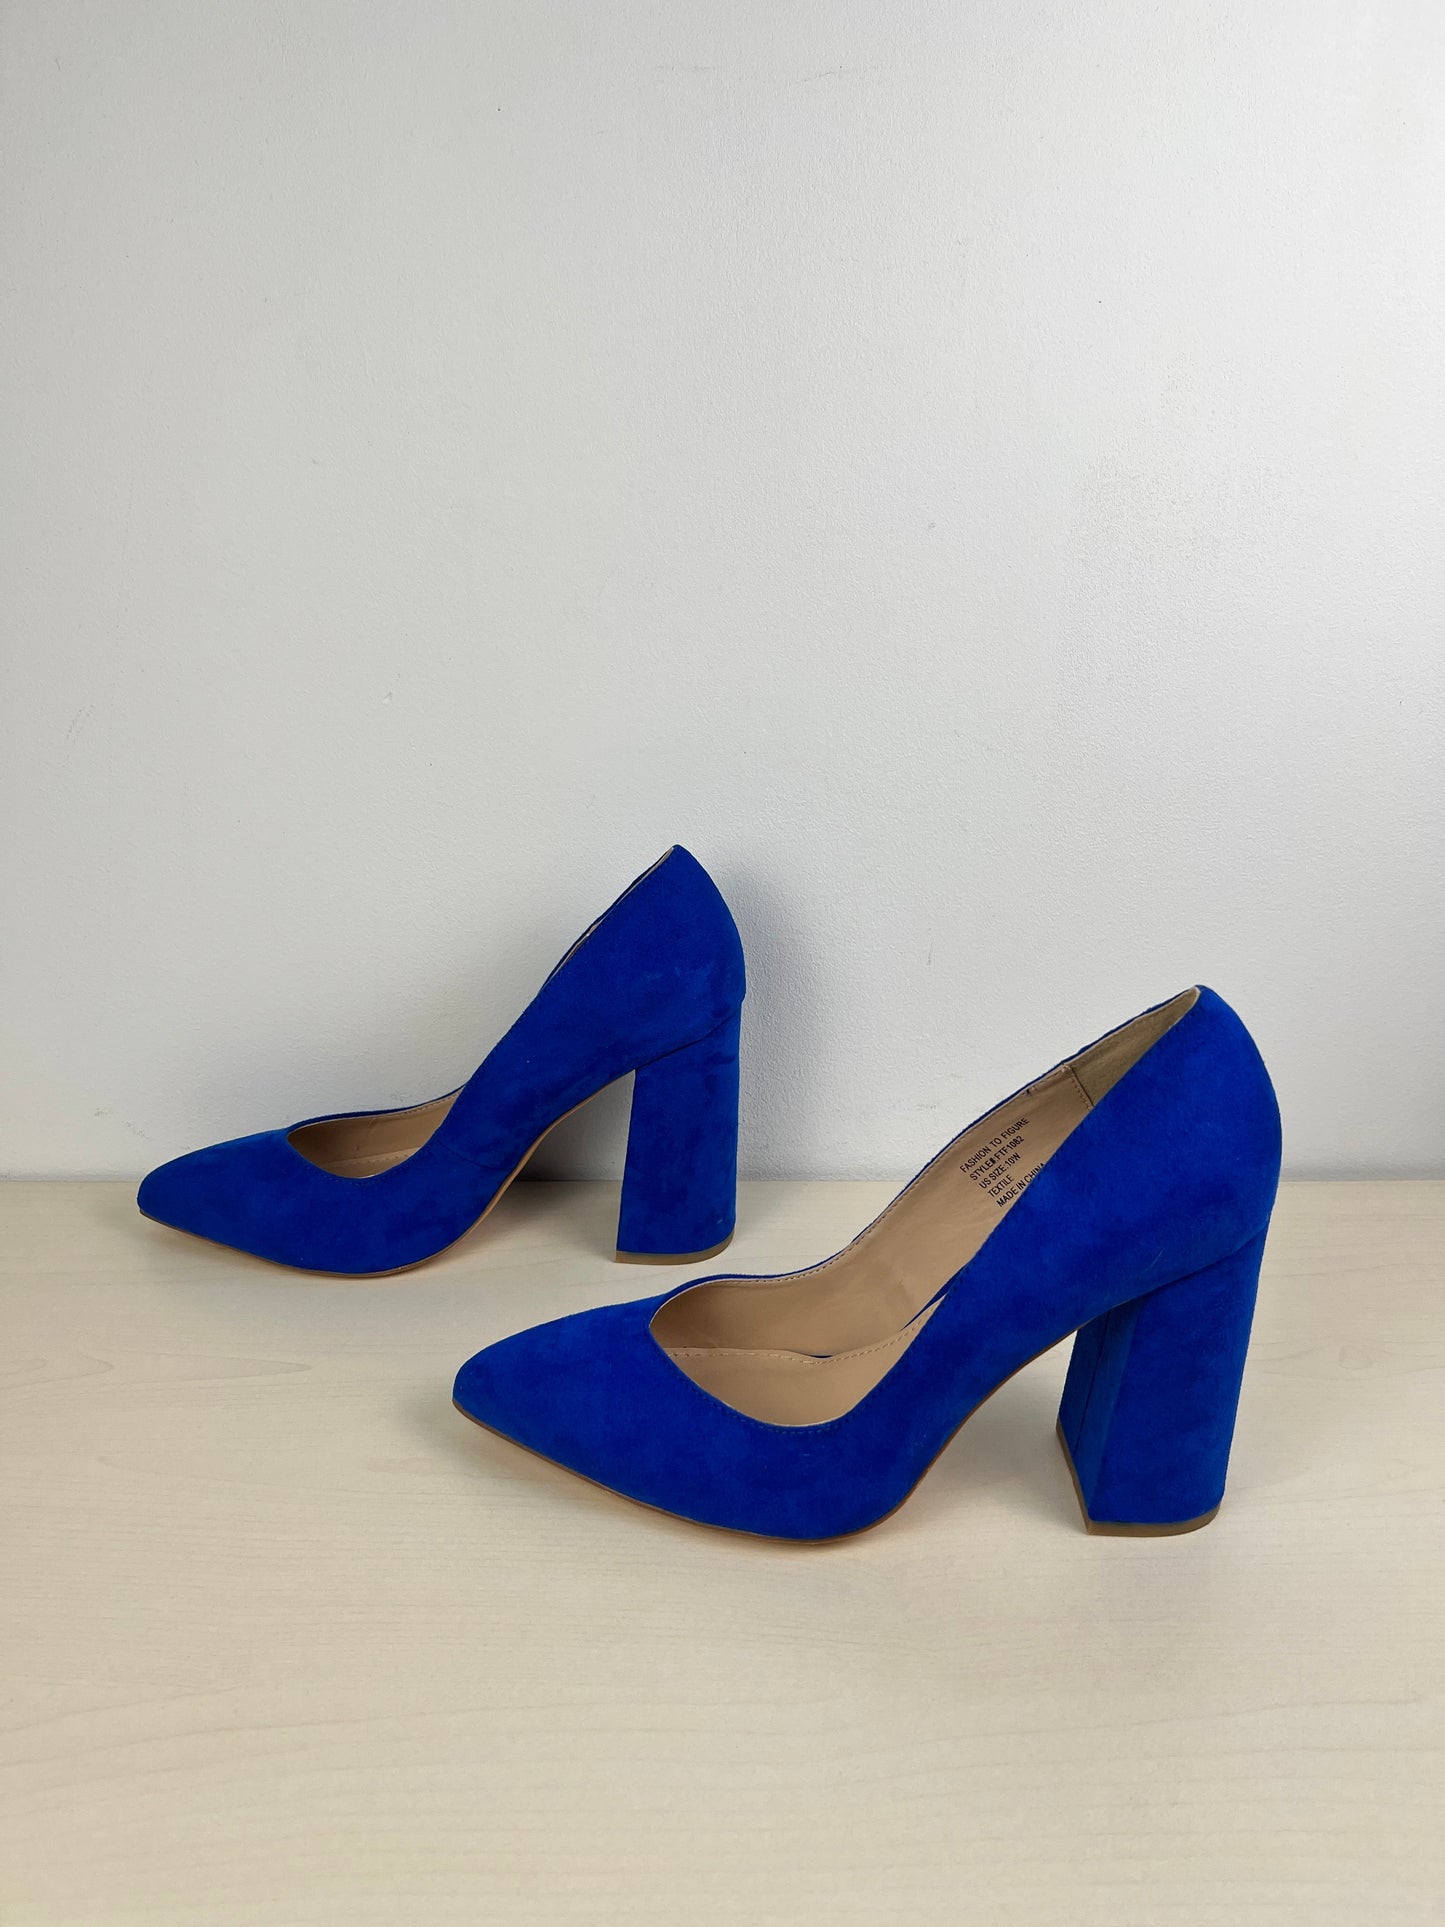 Blue Shoes Heels Block Fashion To Figure, Size 10